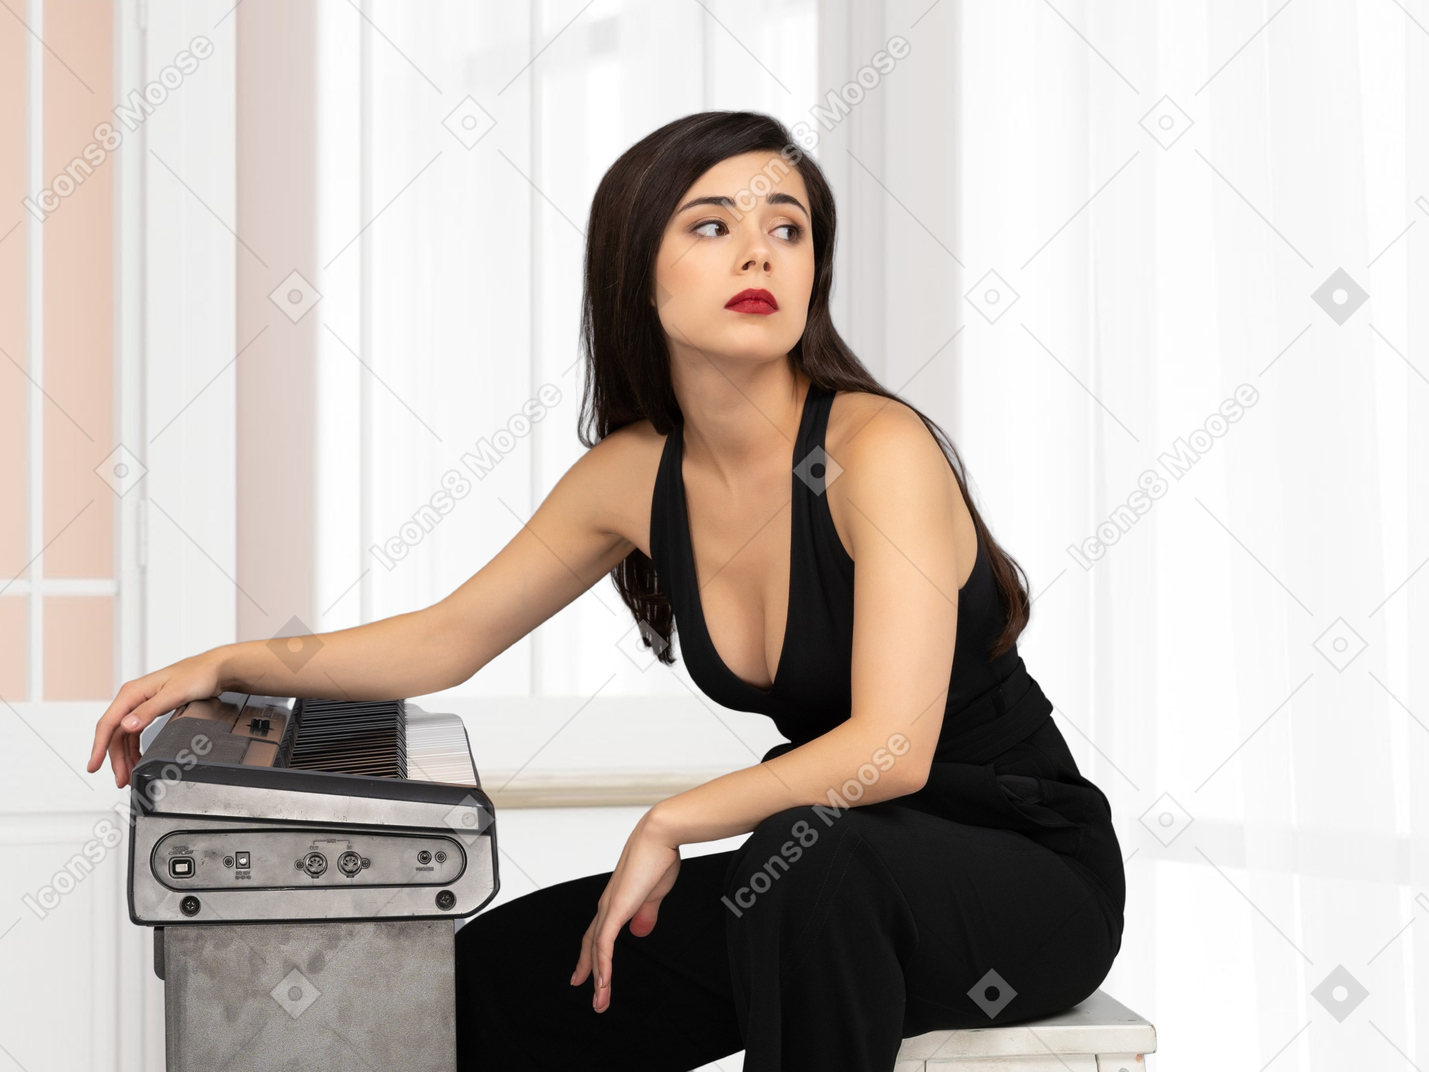 Woman sitting near synthesizer